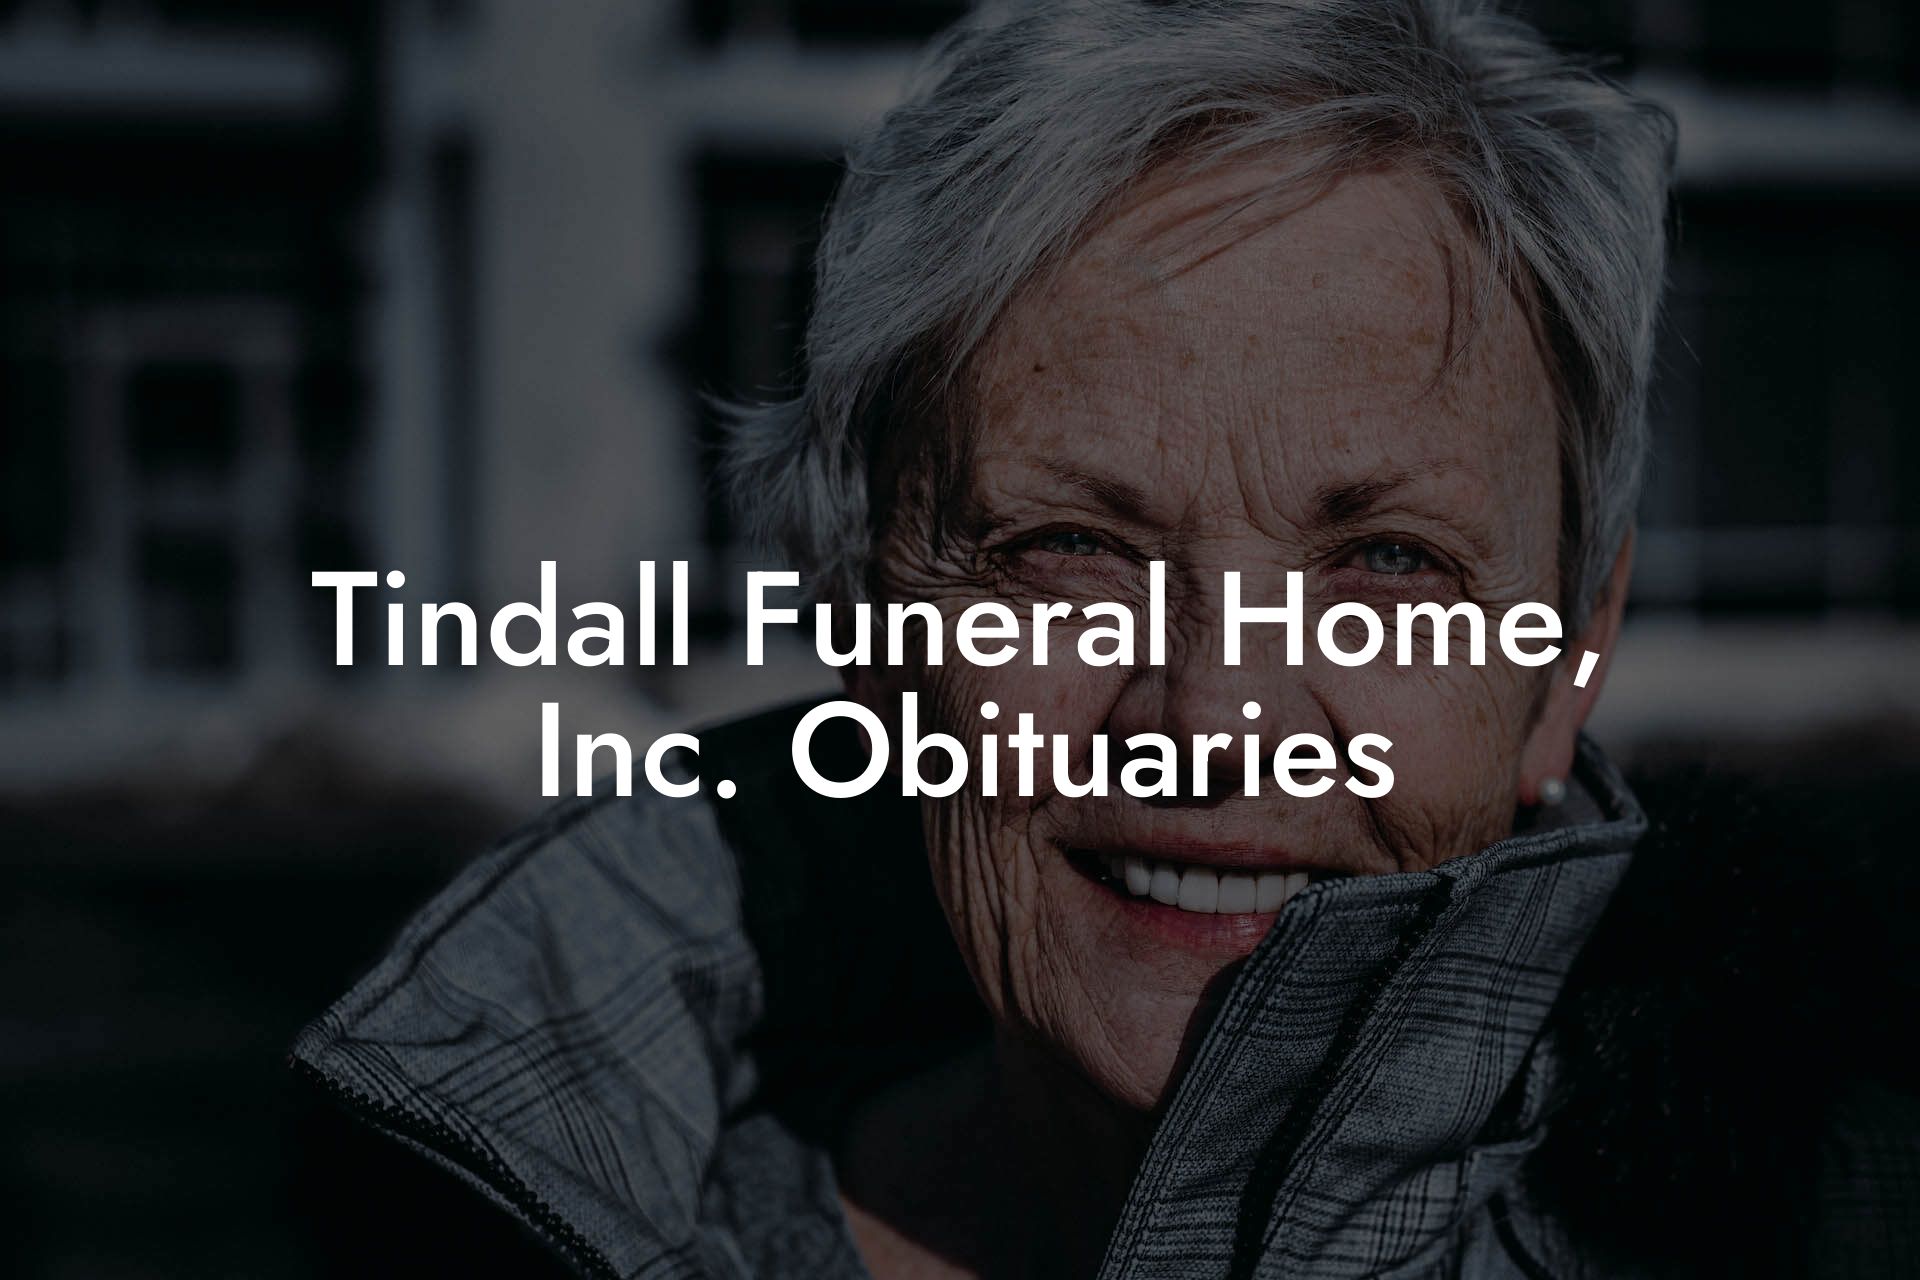 Tindall Funeral Home, Inc. Obituaries